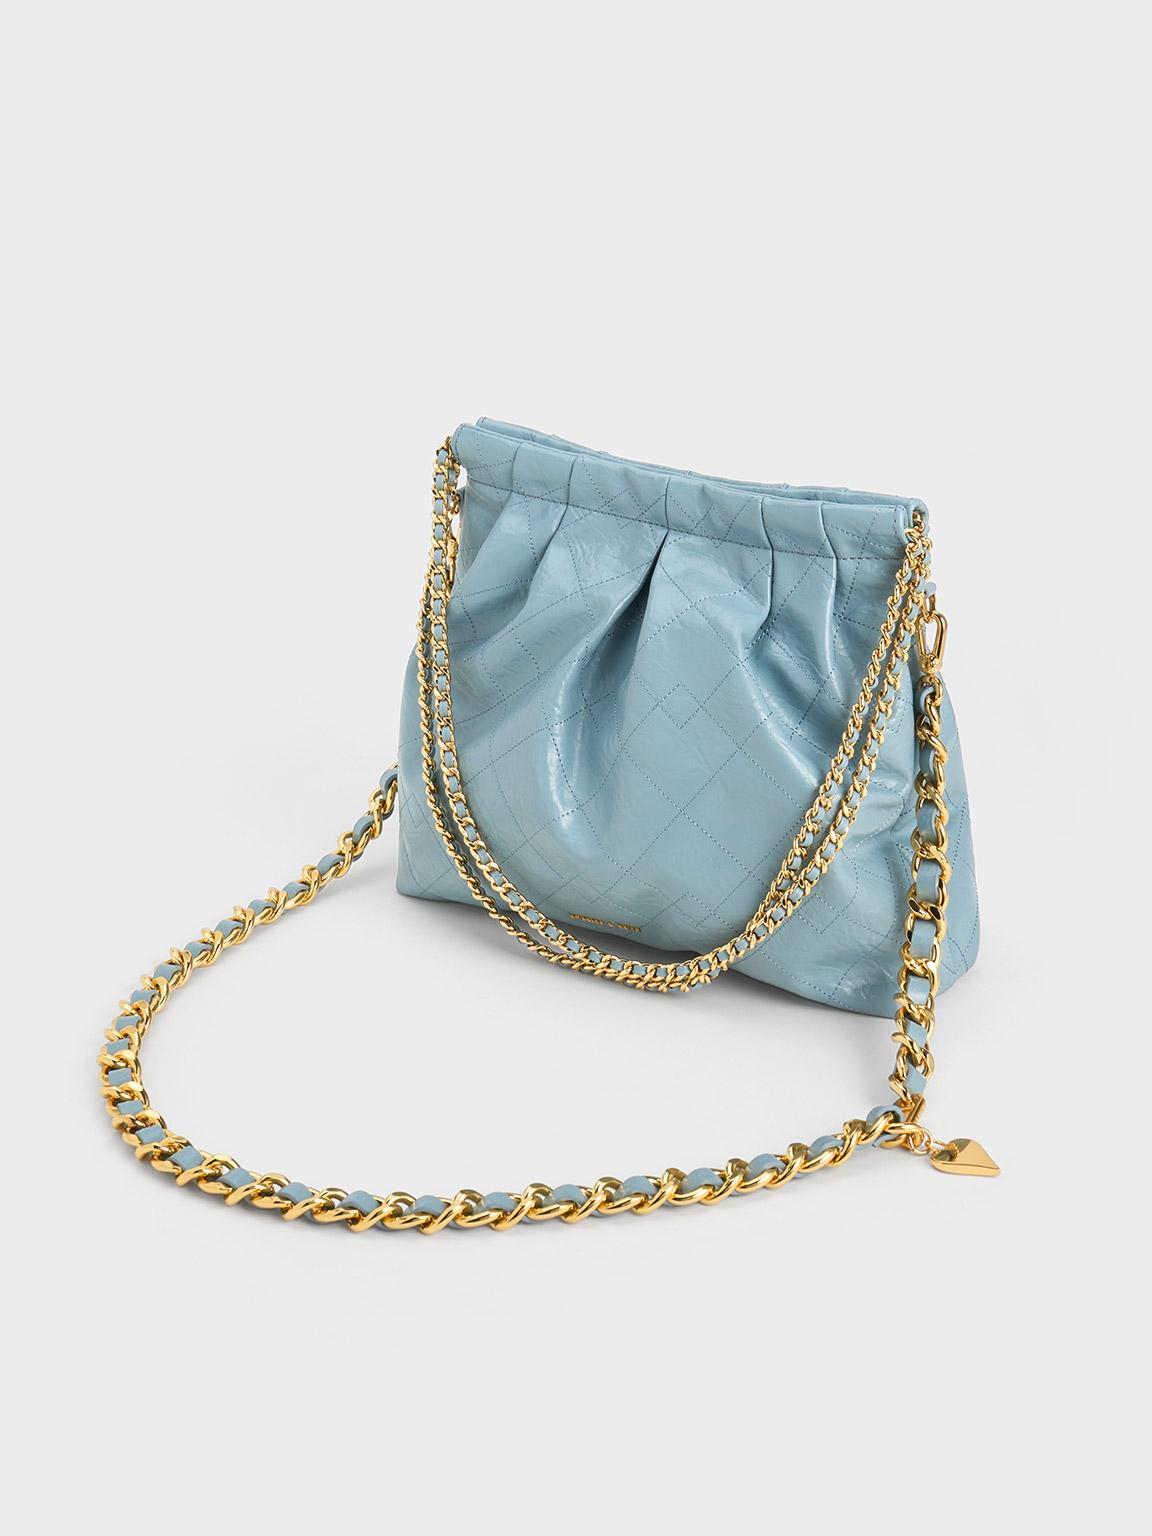 Buy AD ENTERPRISES Latest Trendy Party Sling Bag Shoulder Bag/Handbag &  Chain handle crossbody side bag Stylish Double Chain Handle Sling Bag For  Women's And Girl (Zebra&sky blue) at Amazon.in